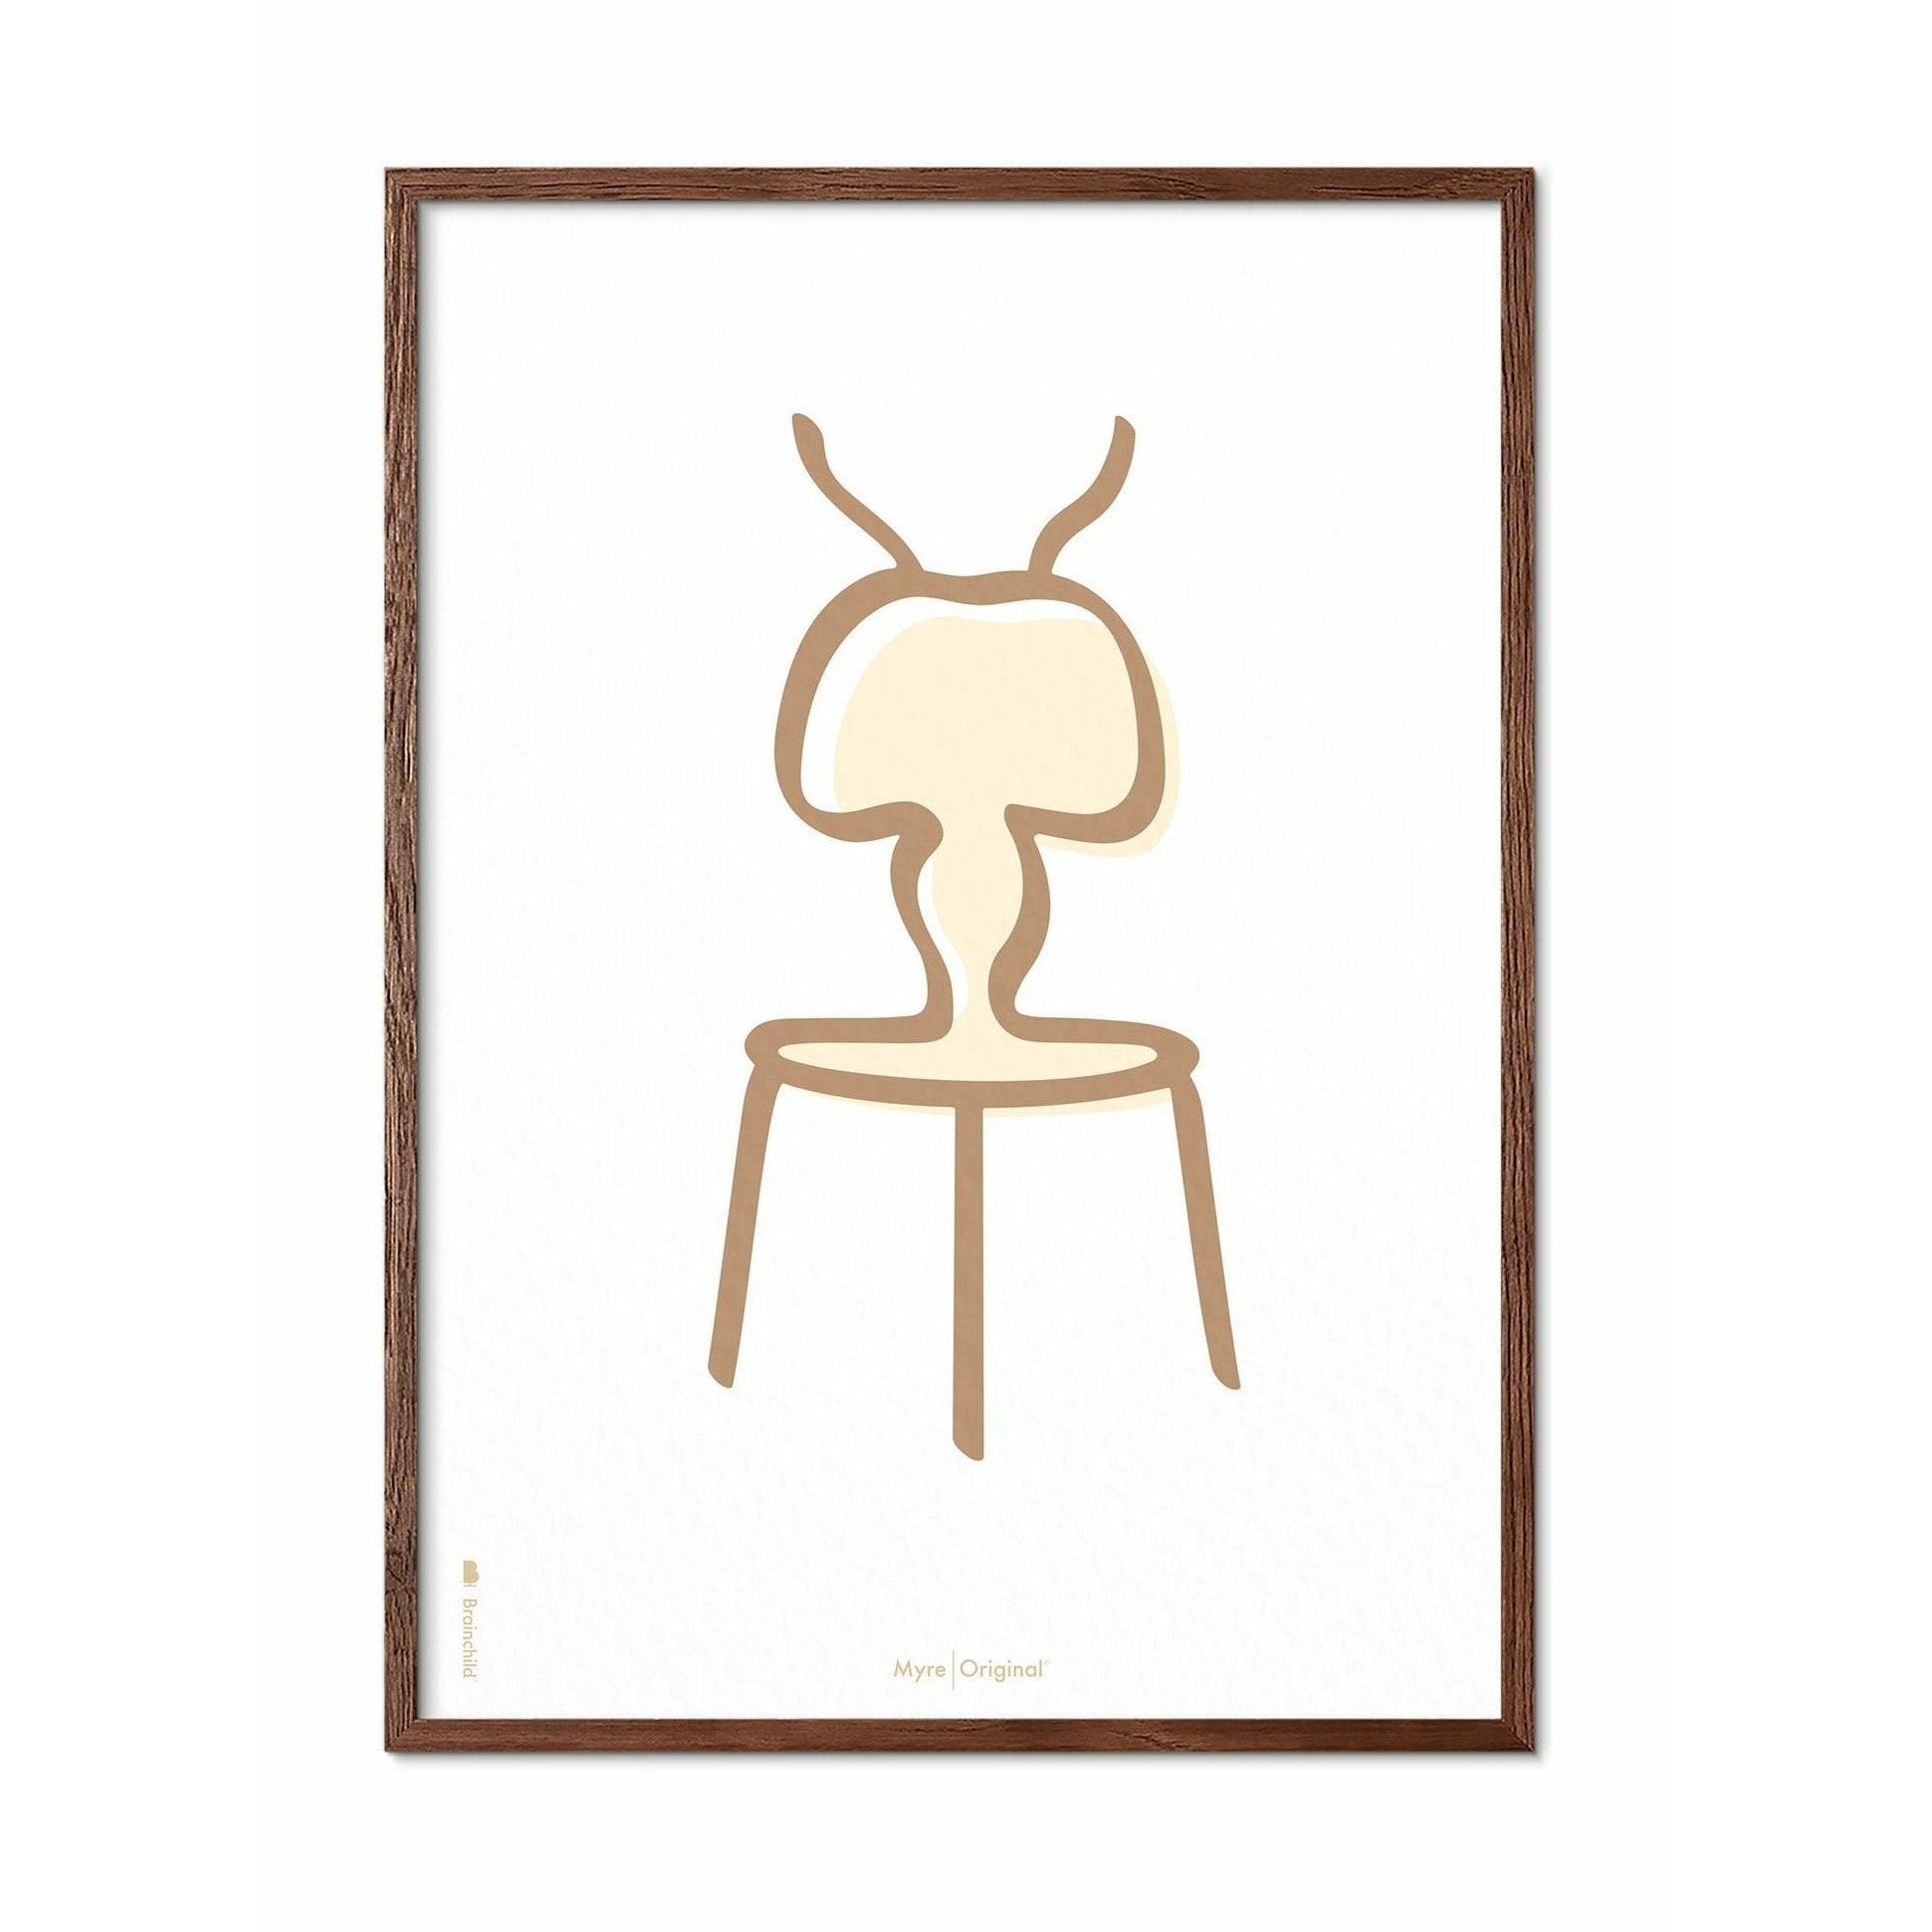 Póster de línea de hormigas de creación, marco de madera oscura 70x100 cm, fondo blanco